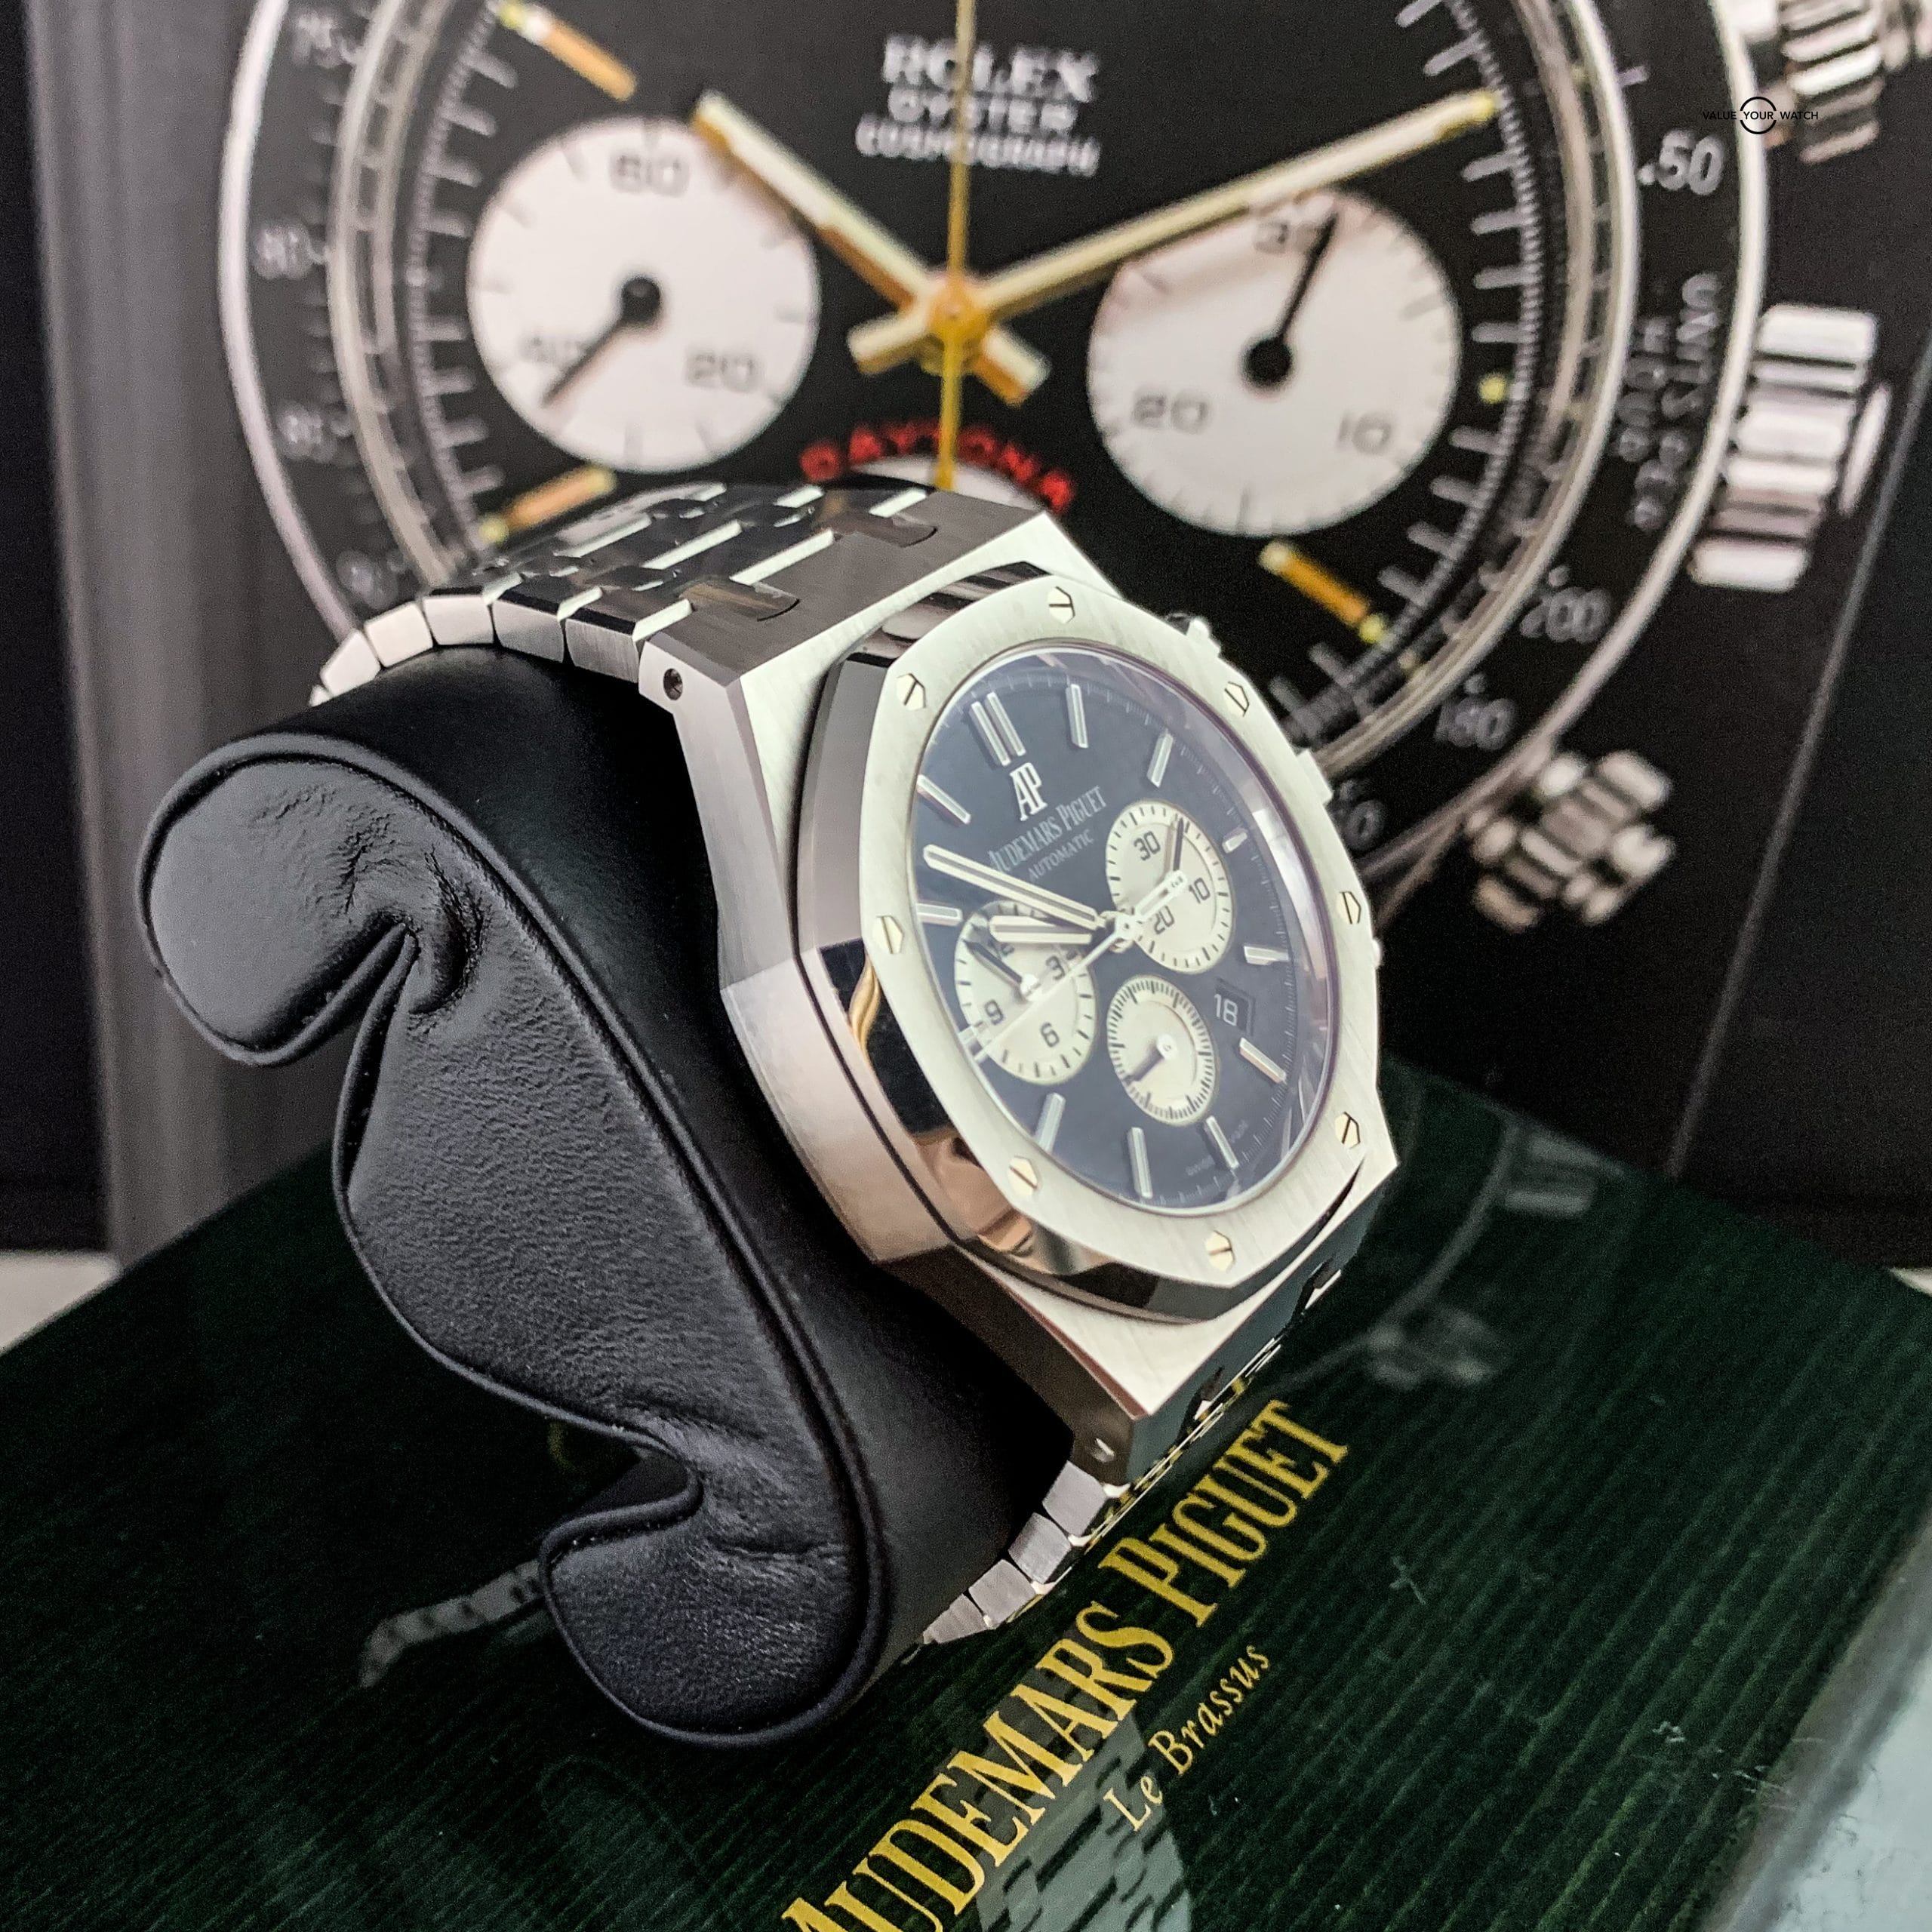 Audemars Piguet Royal Oak Chronograph 41mm Watch Review